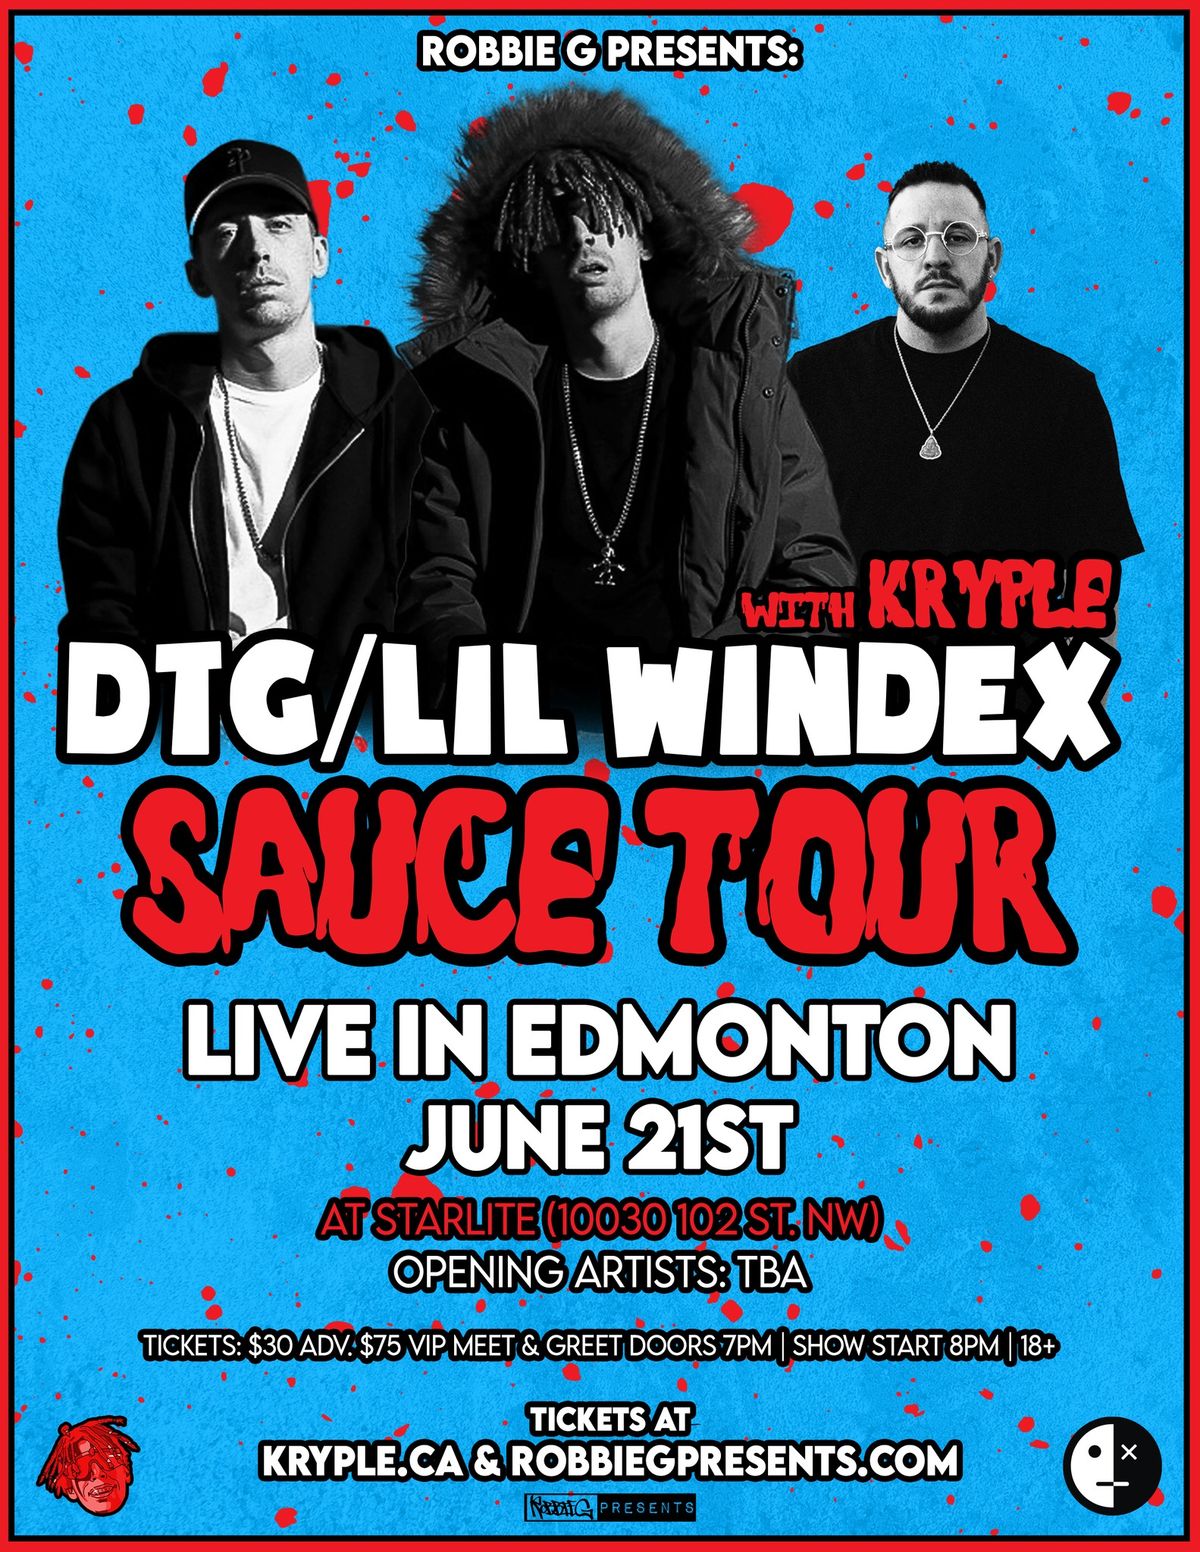 DTG\/Lil Windex Live in Edmonton June 21st at Starlite with Kryple